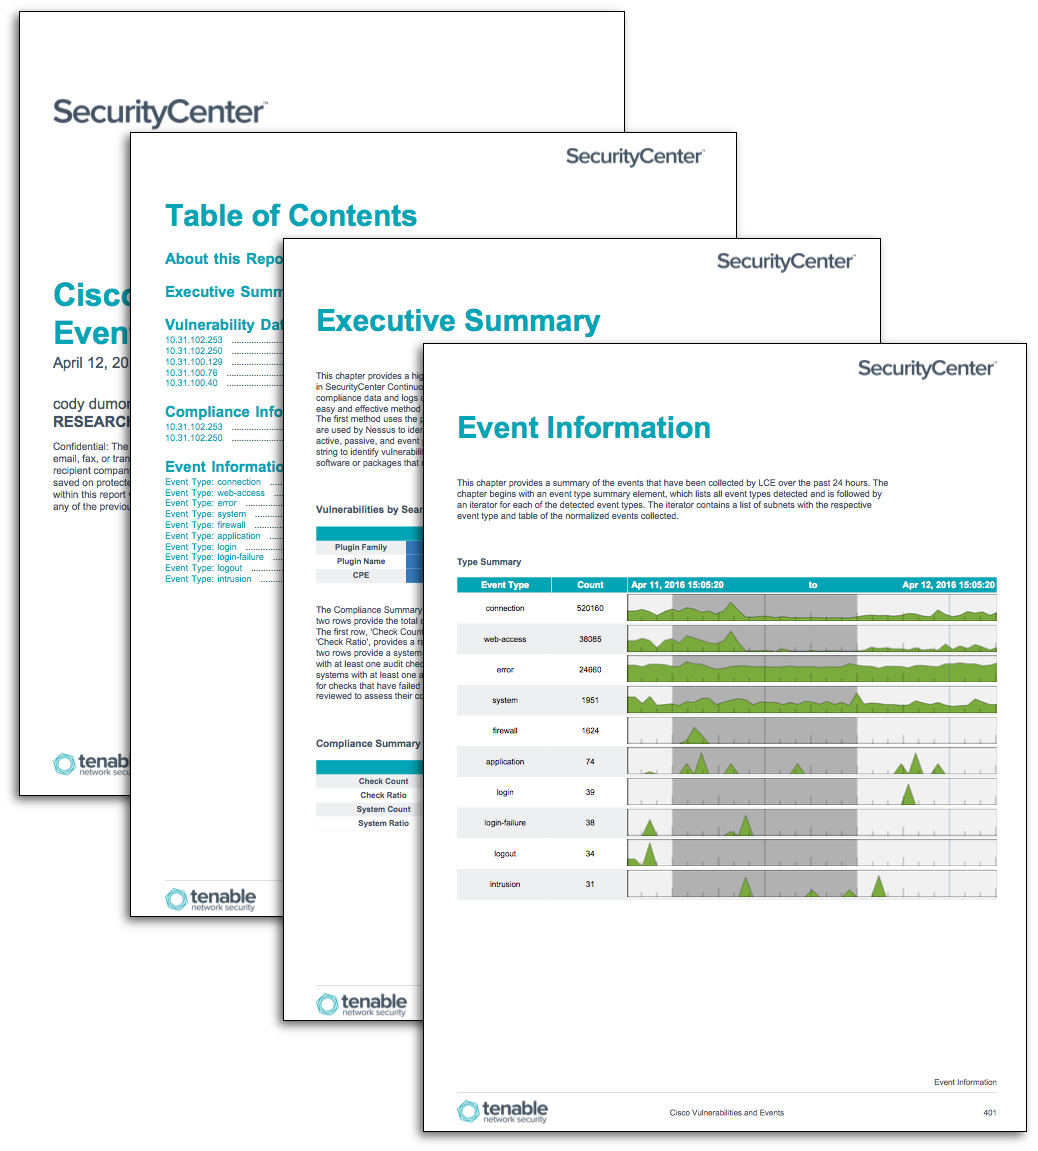 Cisco Vulnerabilities and Events